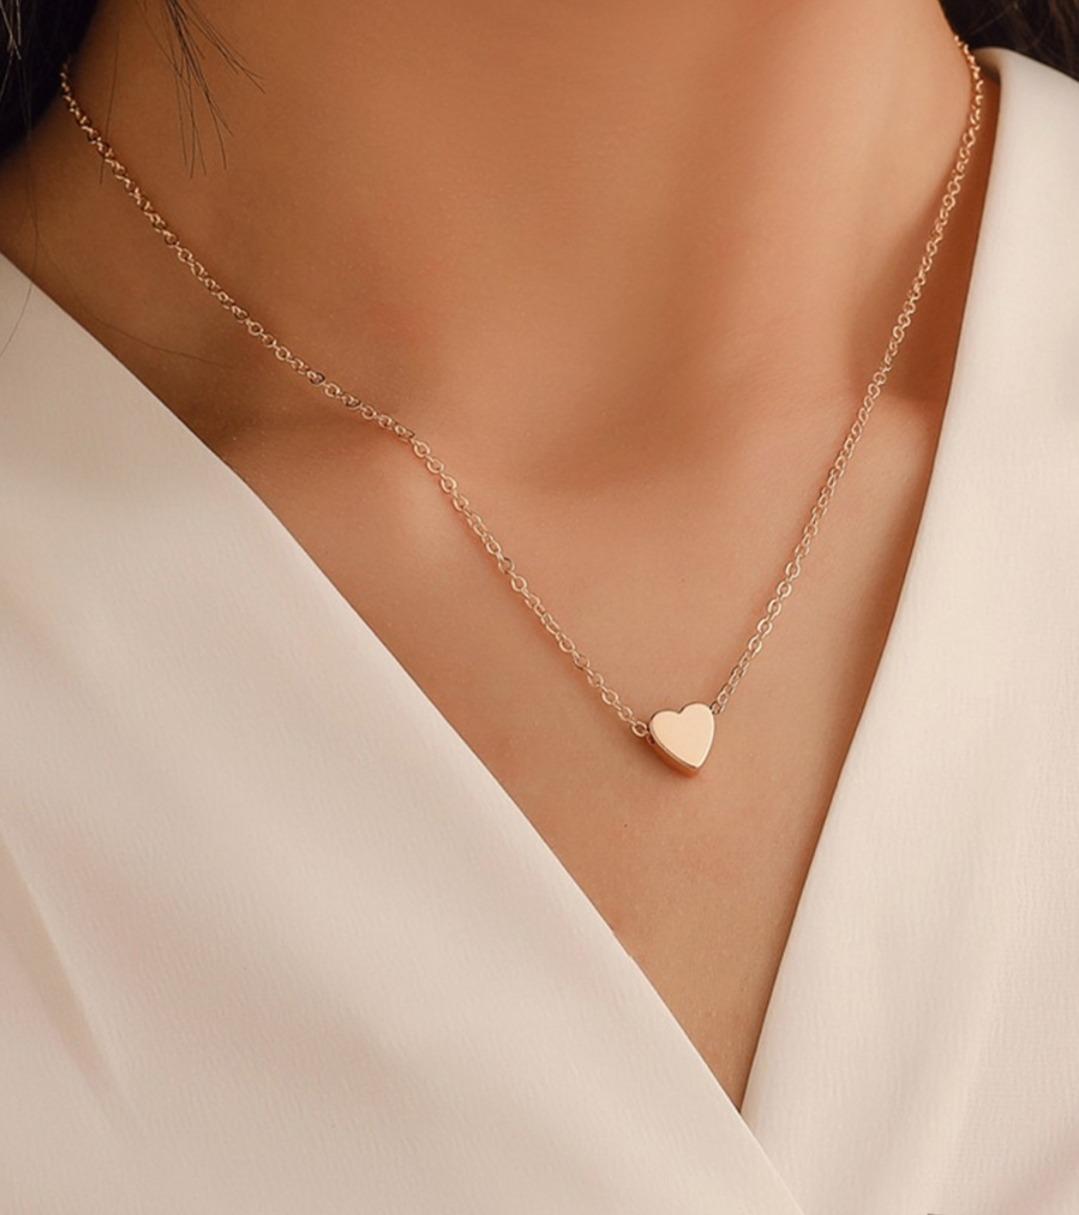 Heart Pendant Necklace/Chain for Women & Girls  -95%